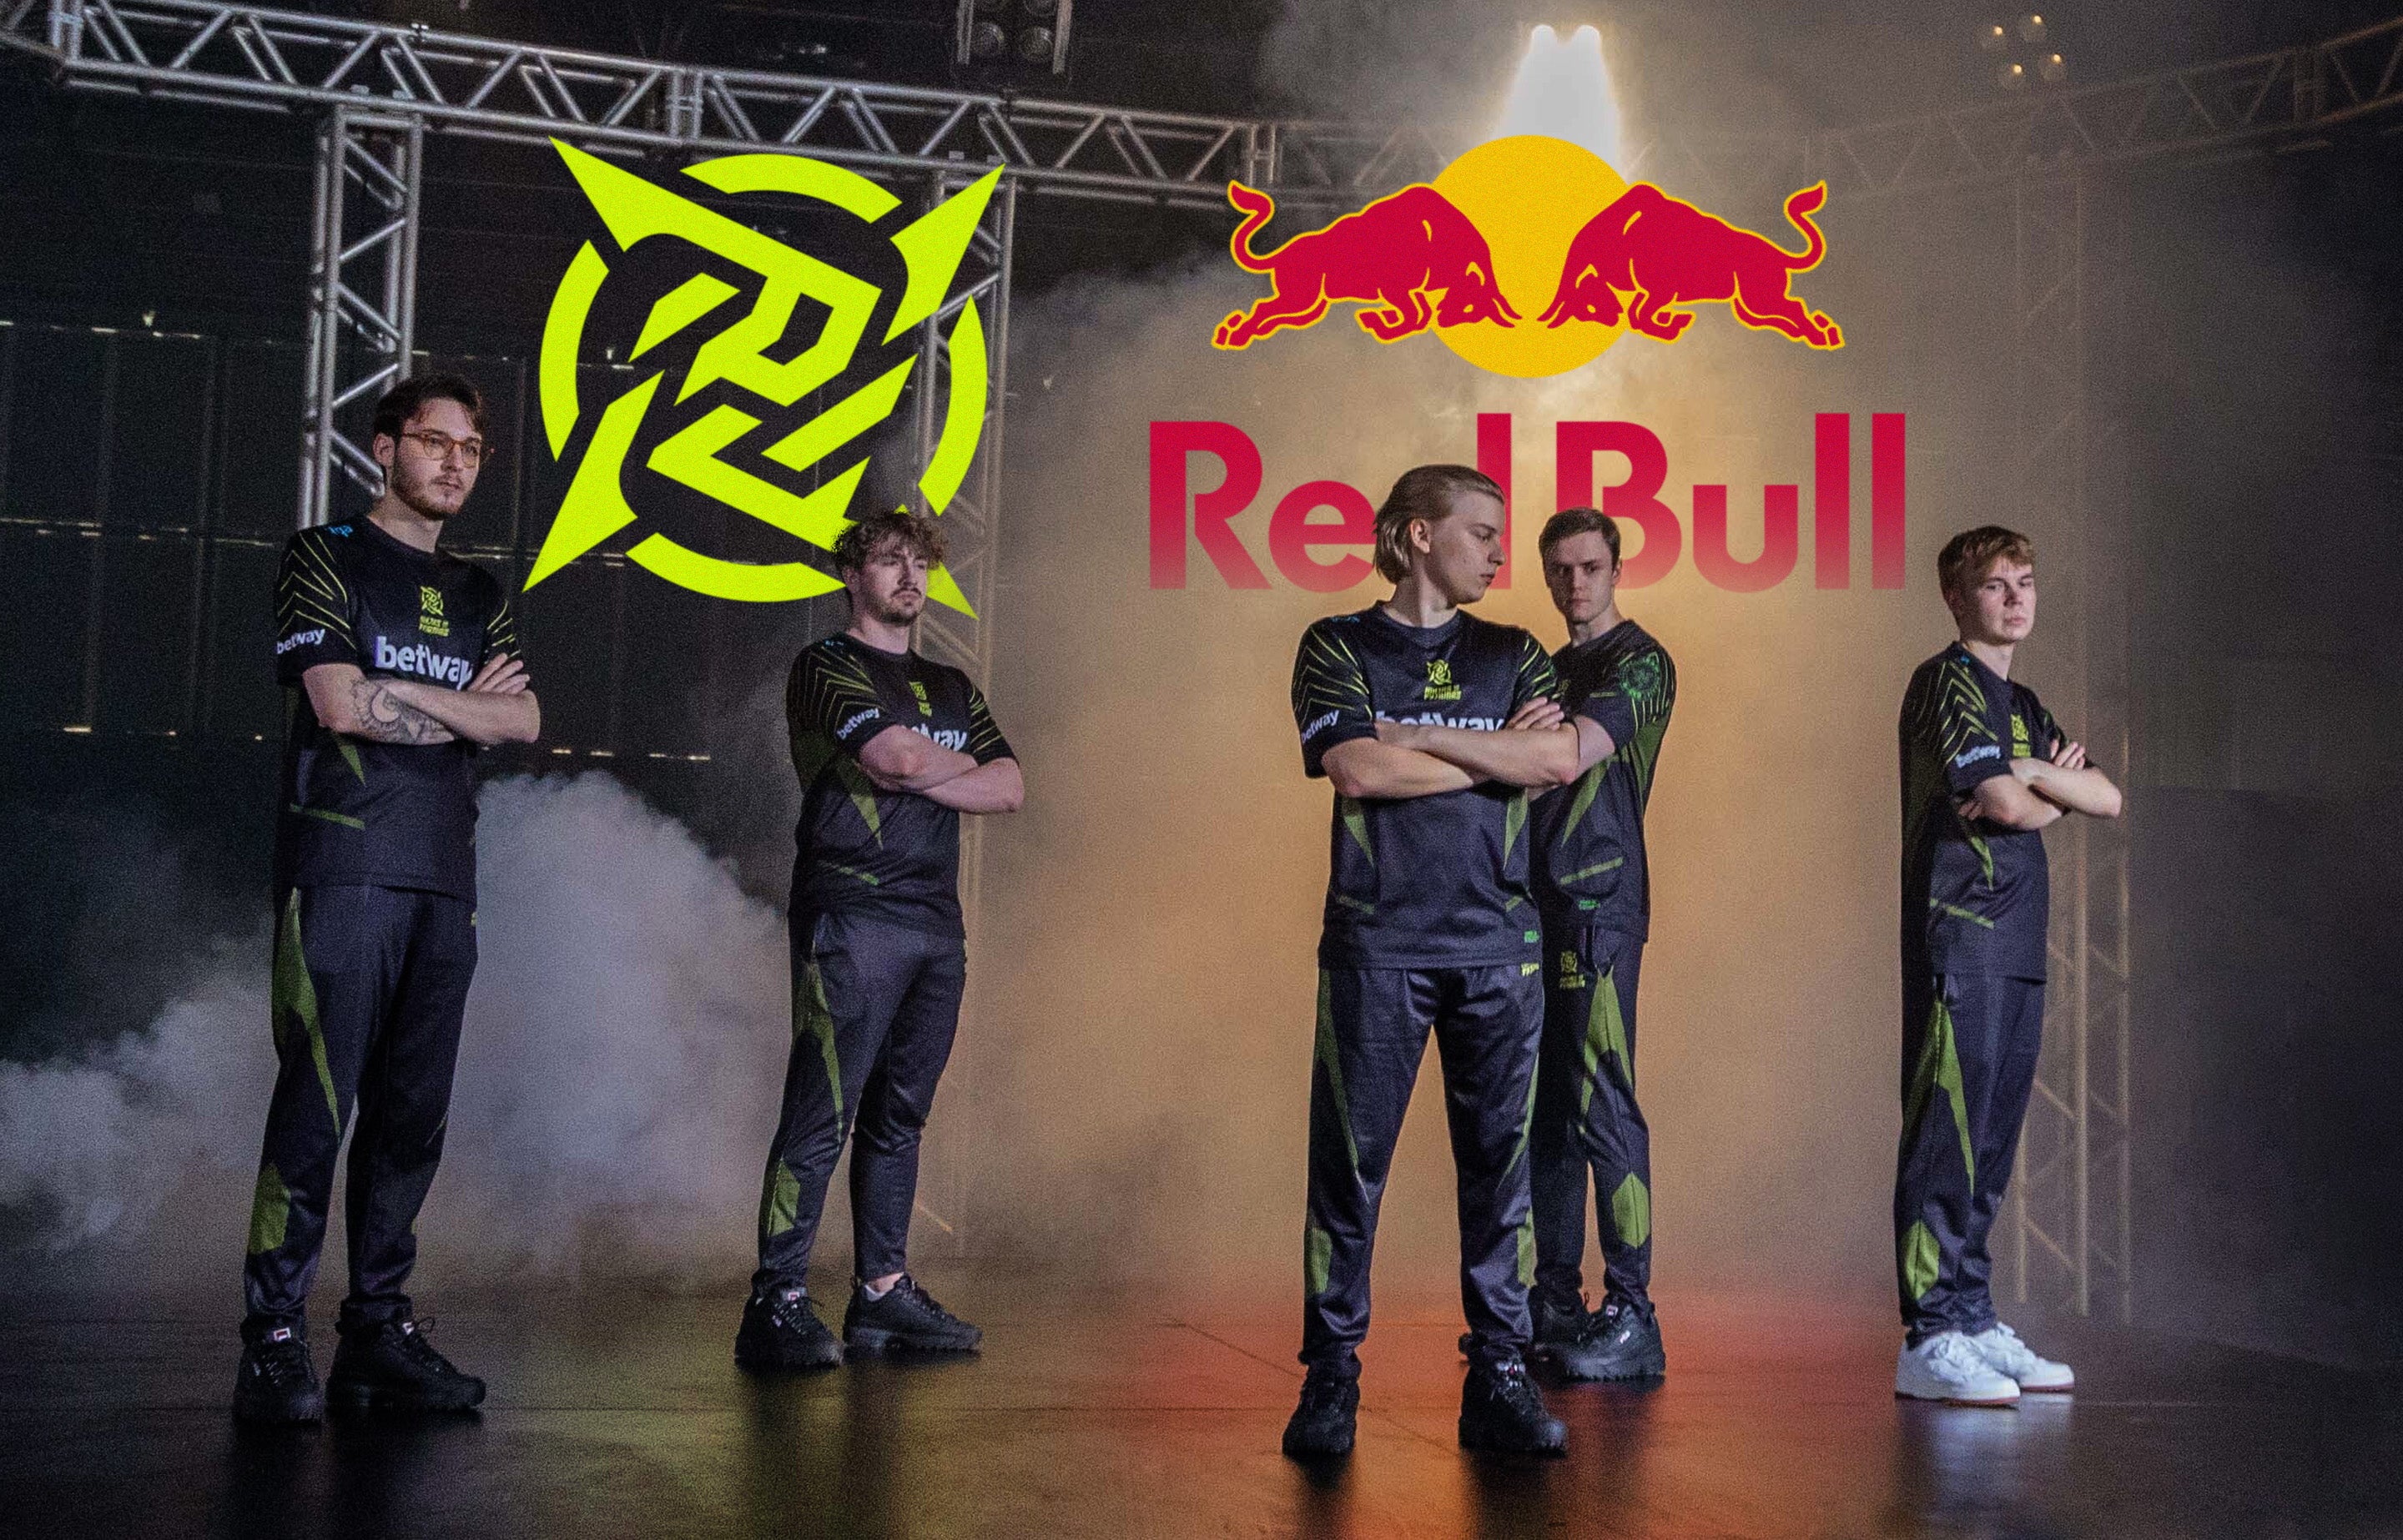 NIP x Red Bull Collaboration with CS:GO team